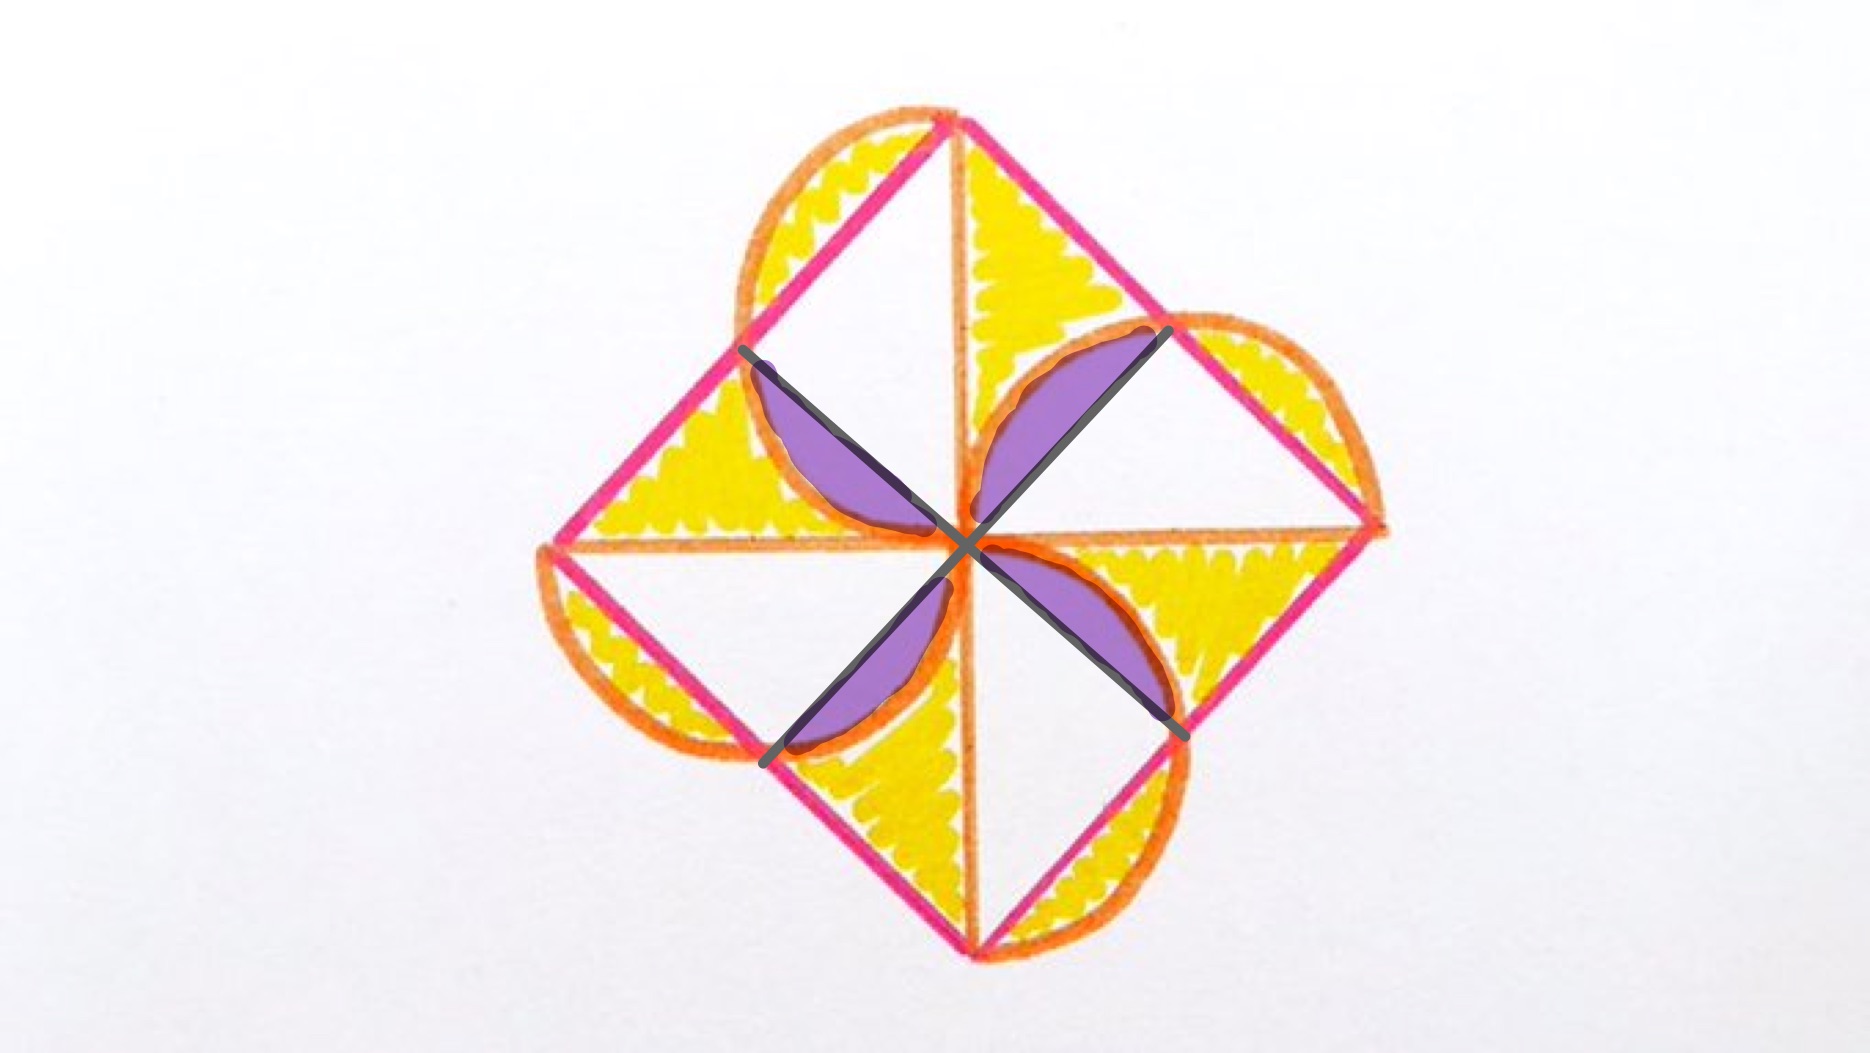 Semi-circles in a square labelled